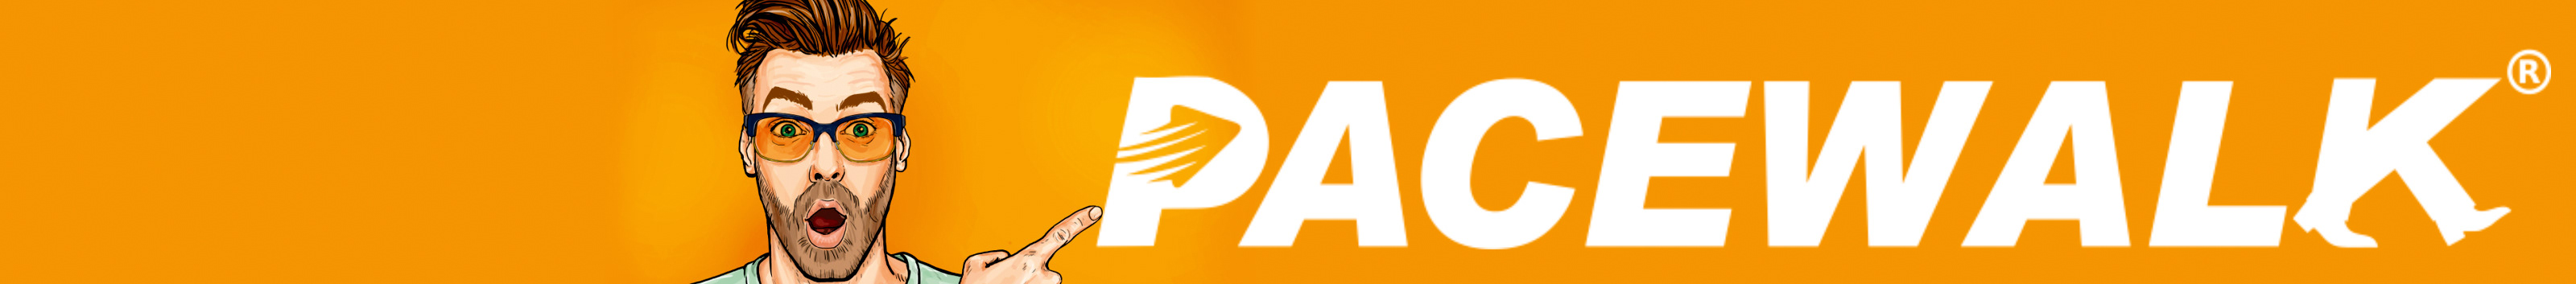 PACEWALK .com's profile banner